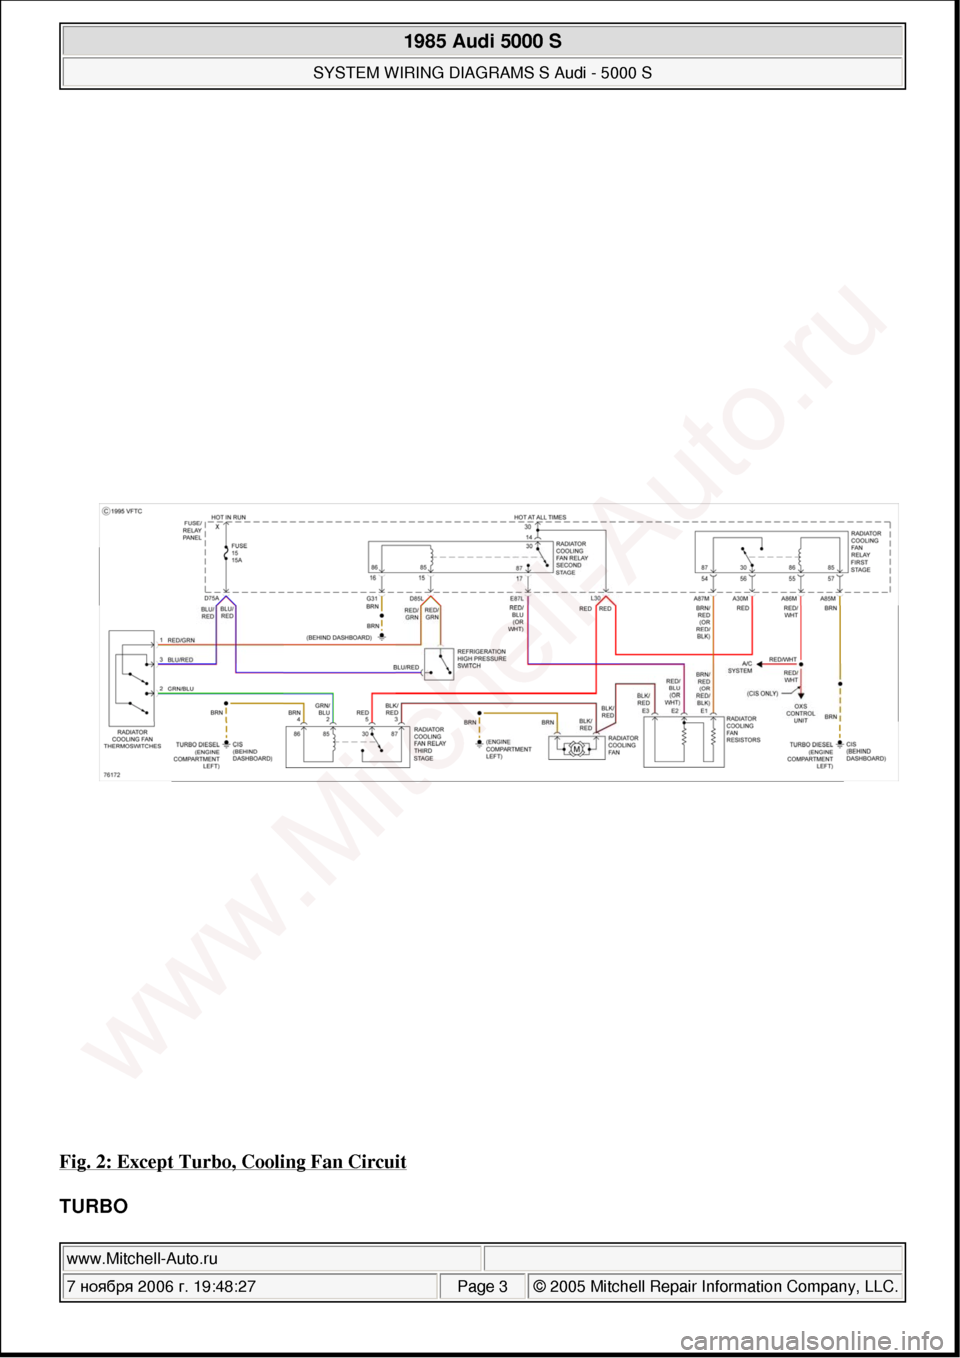 AUDI 5000S 1985 C2 System Wiring Diagram 
Fig. 2: Except Turbo, Cooling Fan Circuit 
TURBO 
 
1985 Audi 5000 S 
SYSTEM WIRING DIAGRAMS S Audi - 5000 S  
www.Mitchell-Auto.ru  
7  ноября  2006 г. 19:48:27Page 3 © 2005 Mitchell Repair 